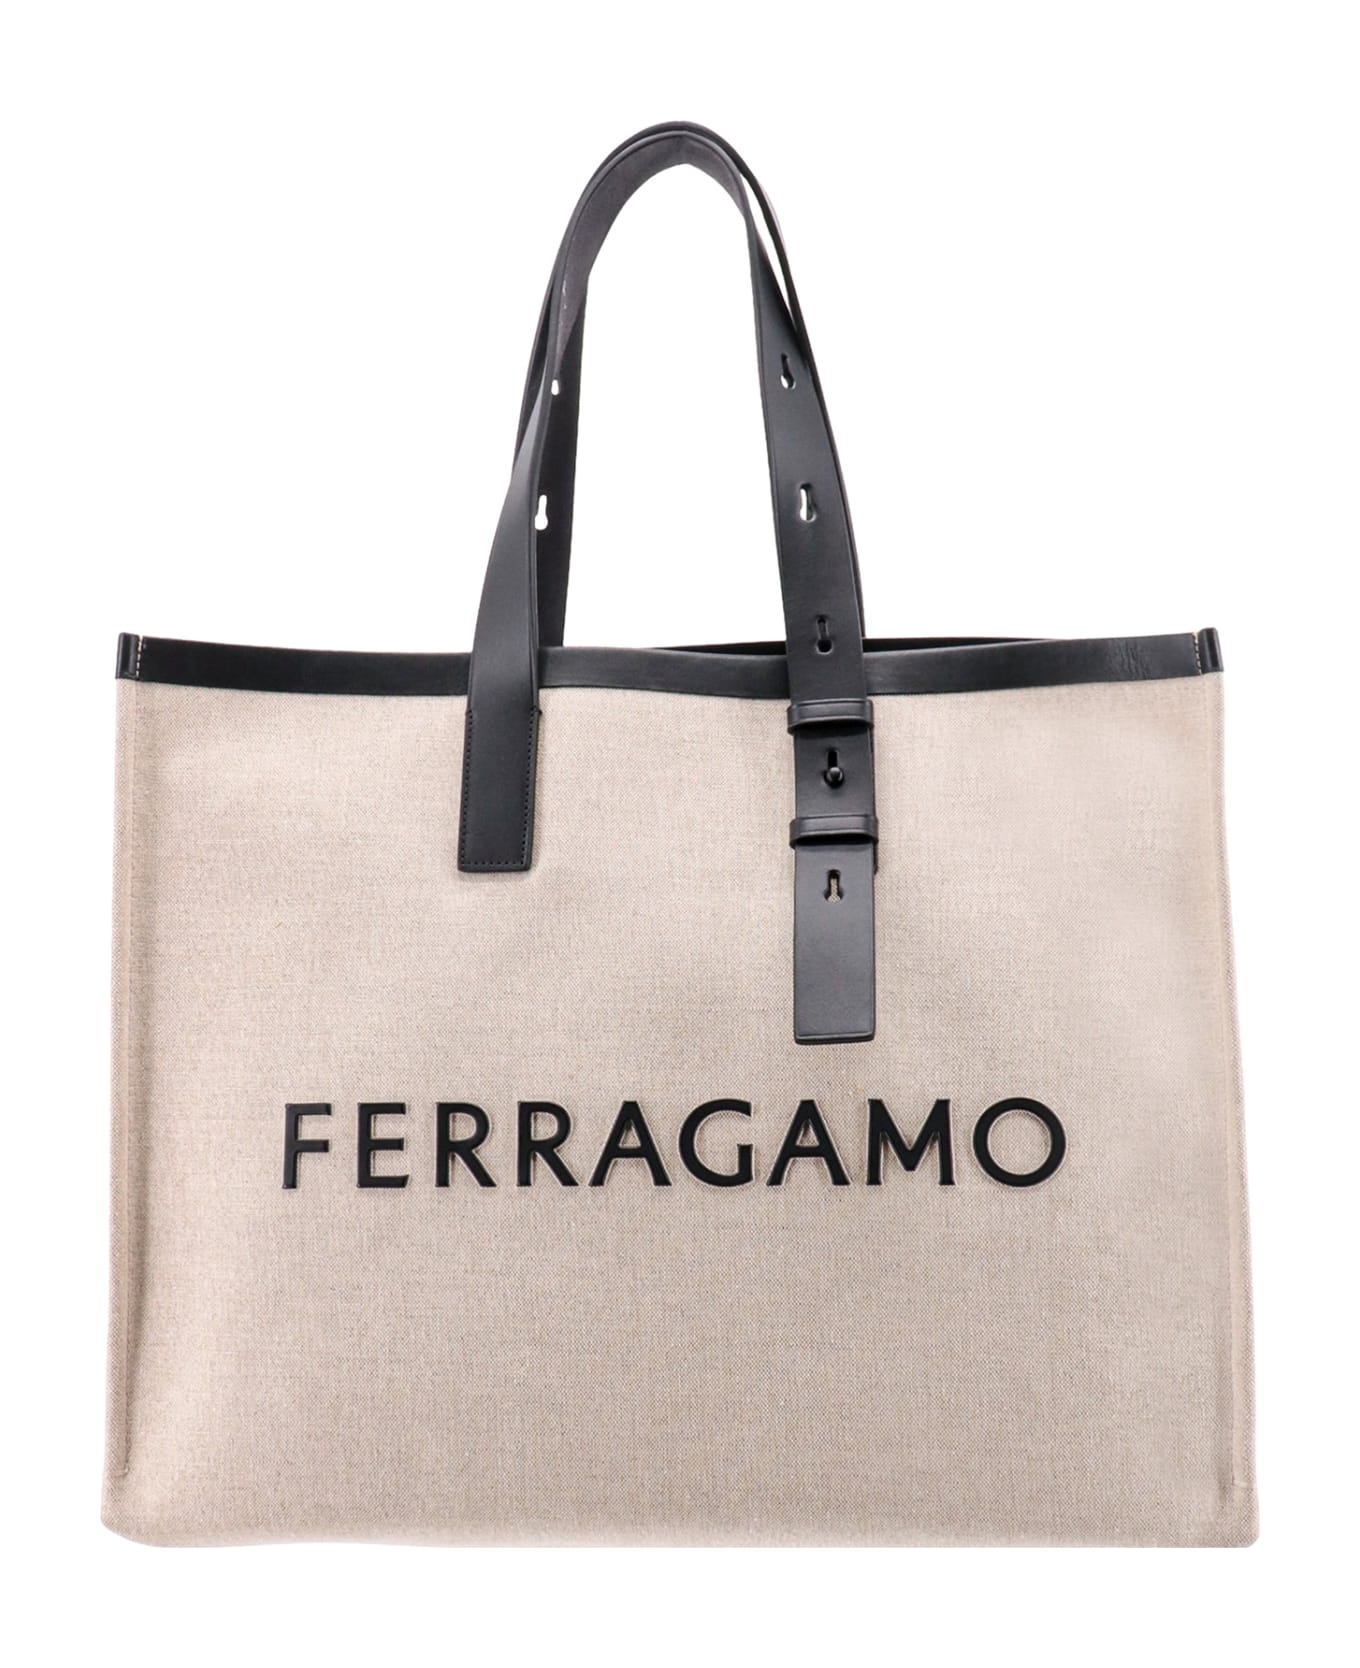 Ferragamo Handbag - Beige トートバッグ